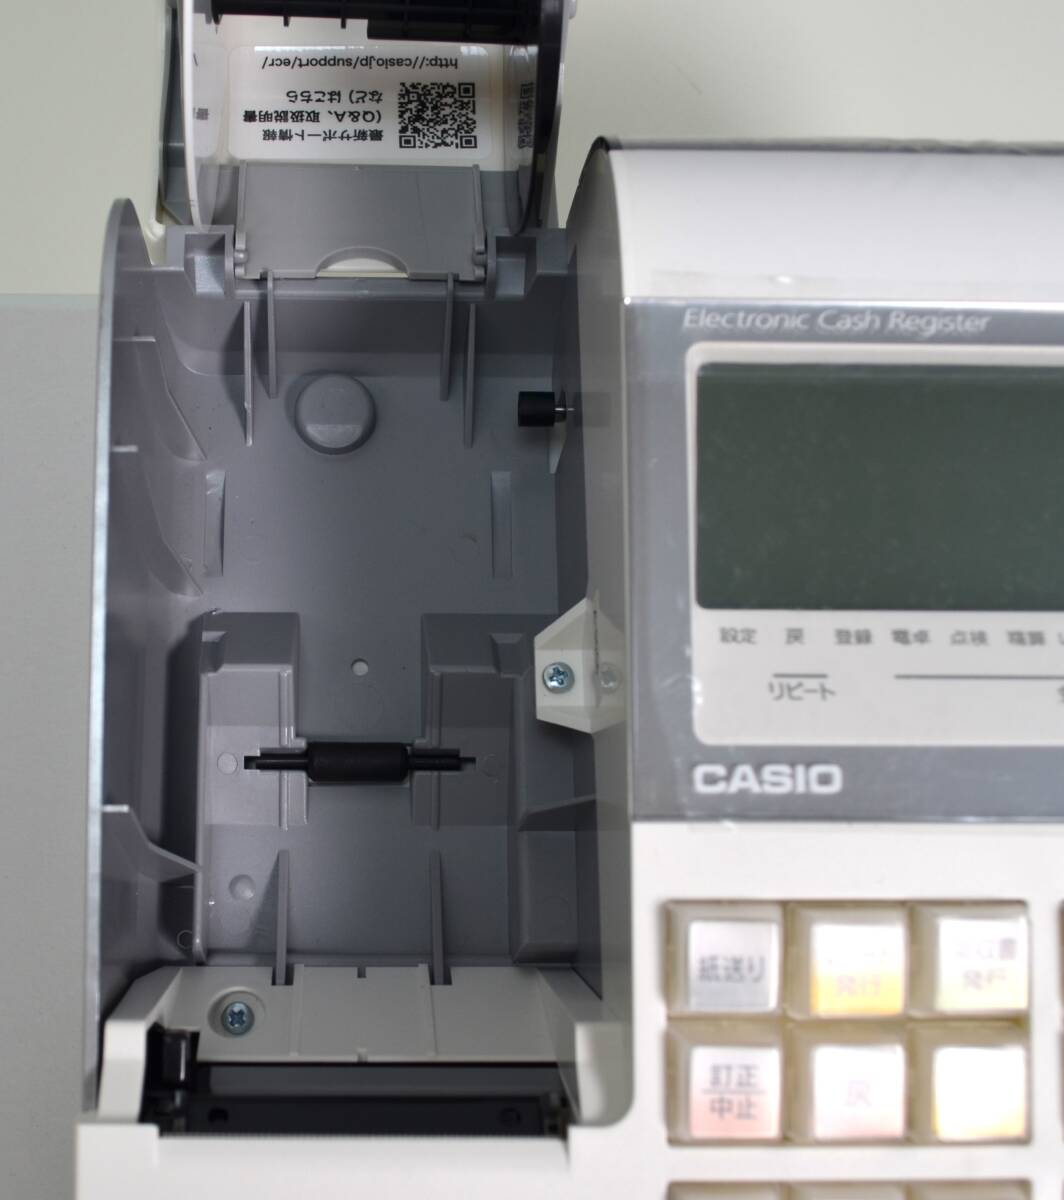  CASIO / TE-400-WE / 電子レジスタ 10部門 ドロア分離型 / インボイス対応レジ SDカード対応 _画像6